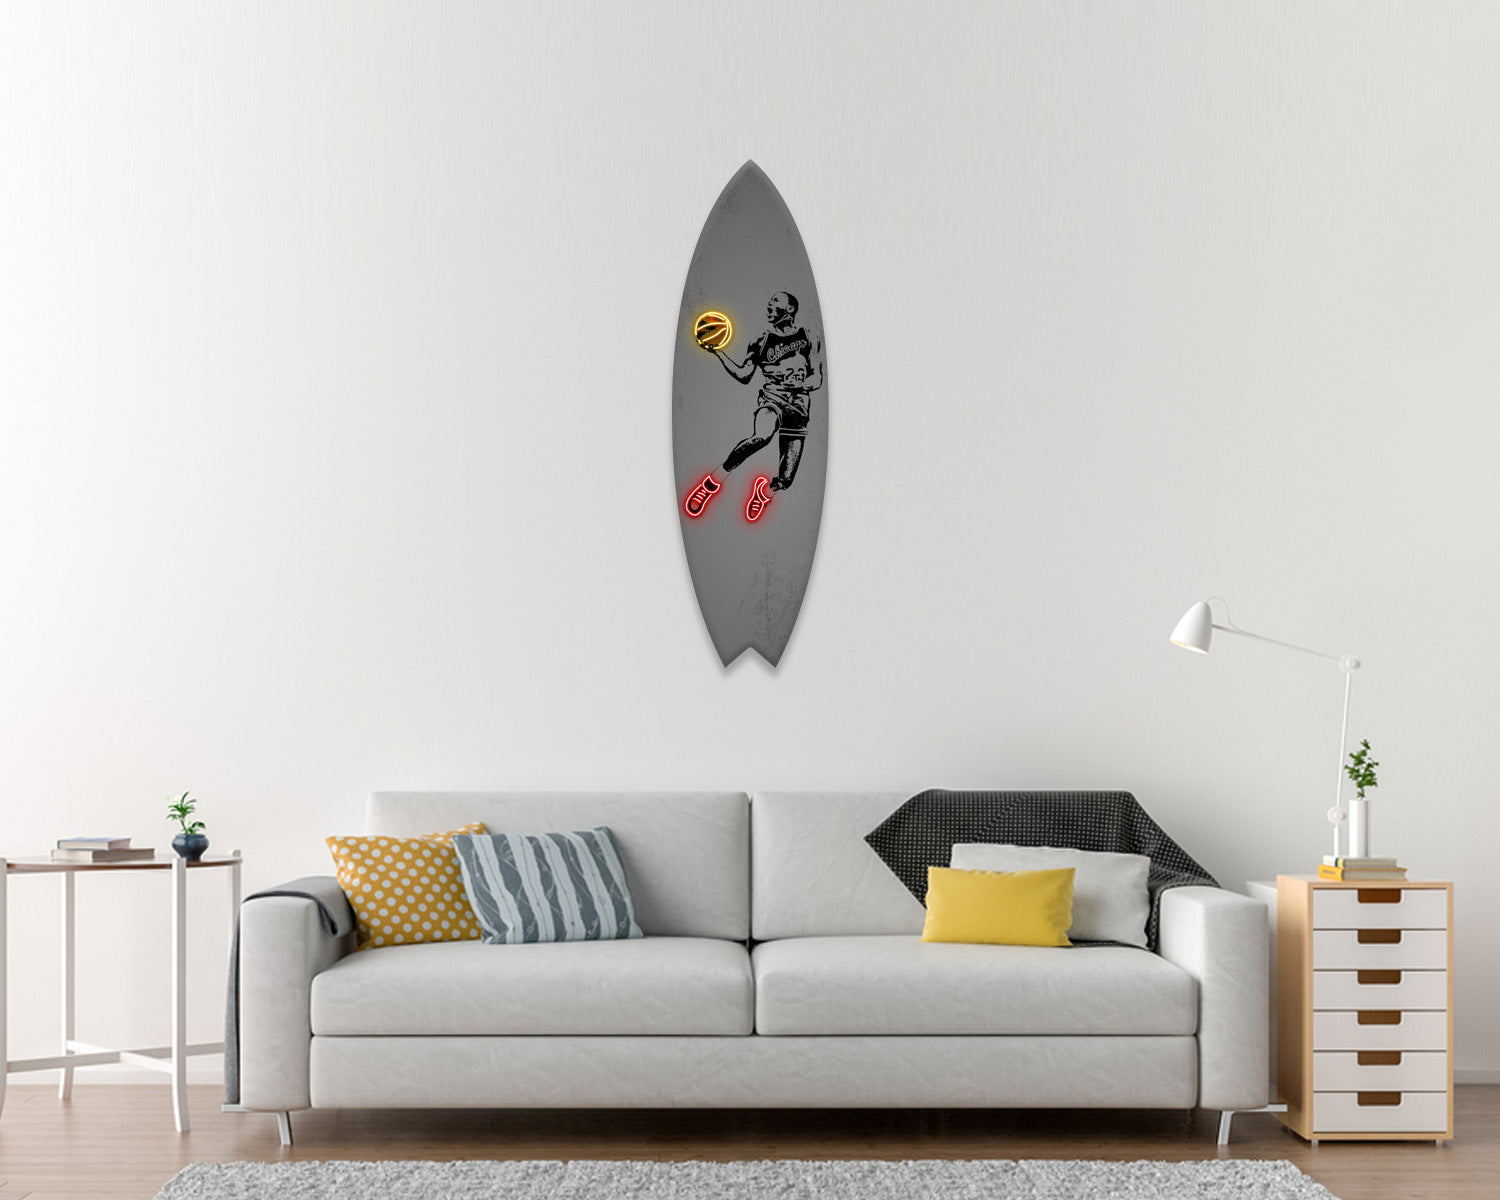 Michael Jordan Acrylic Surfboard Wall Art 